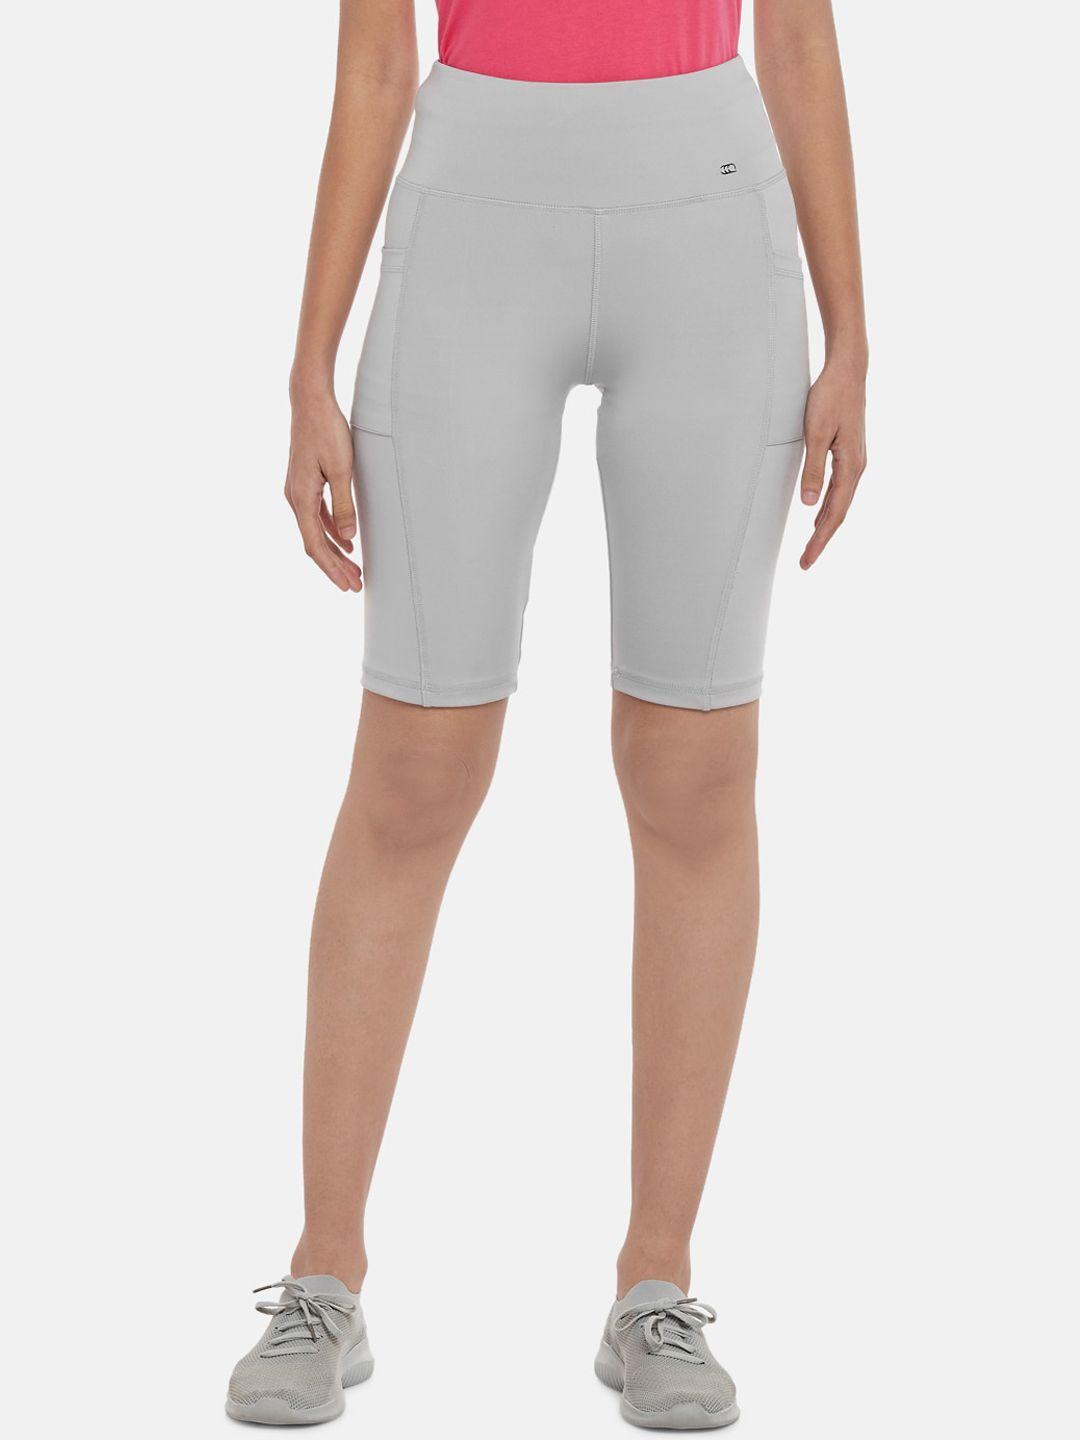 ajile by pantaloons women grey sports shorts